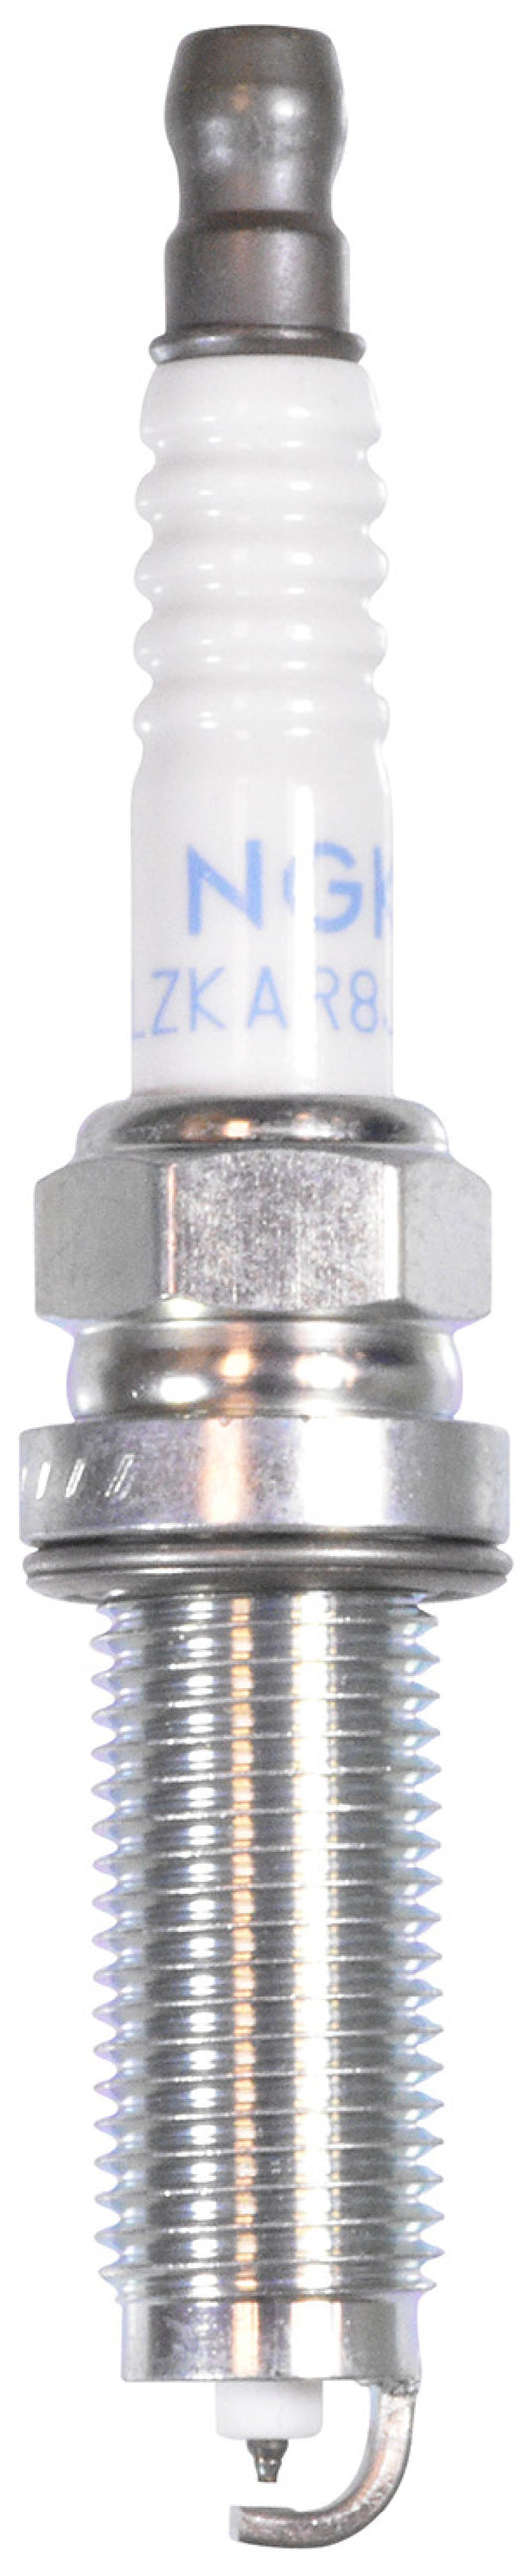 NGK - Laser Iridium Spark Plug Box of 4 (ILZKAR8J8SY)